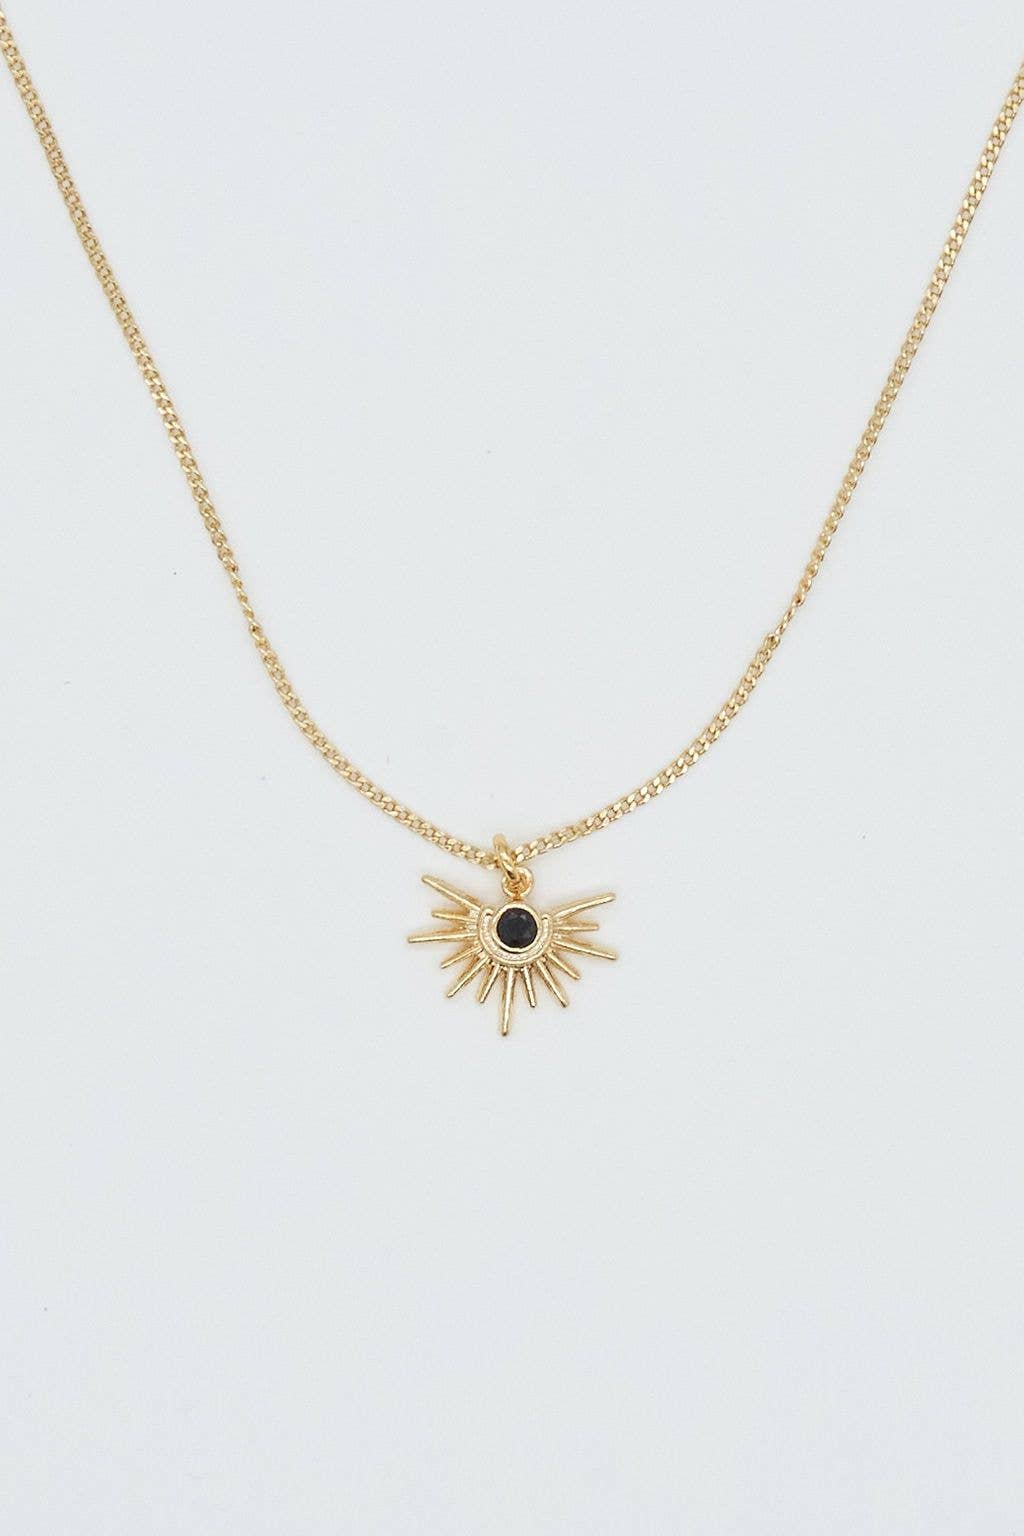 Brenda Grands Jewelry - Crystal Sun Necklace in Black